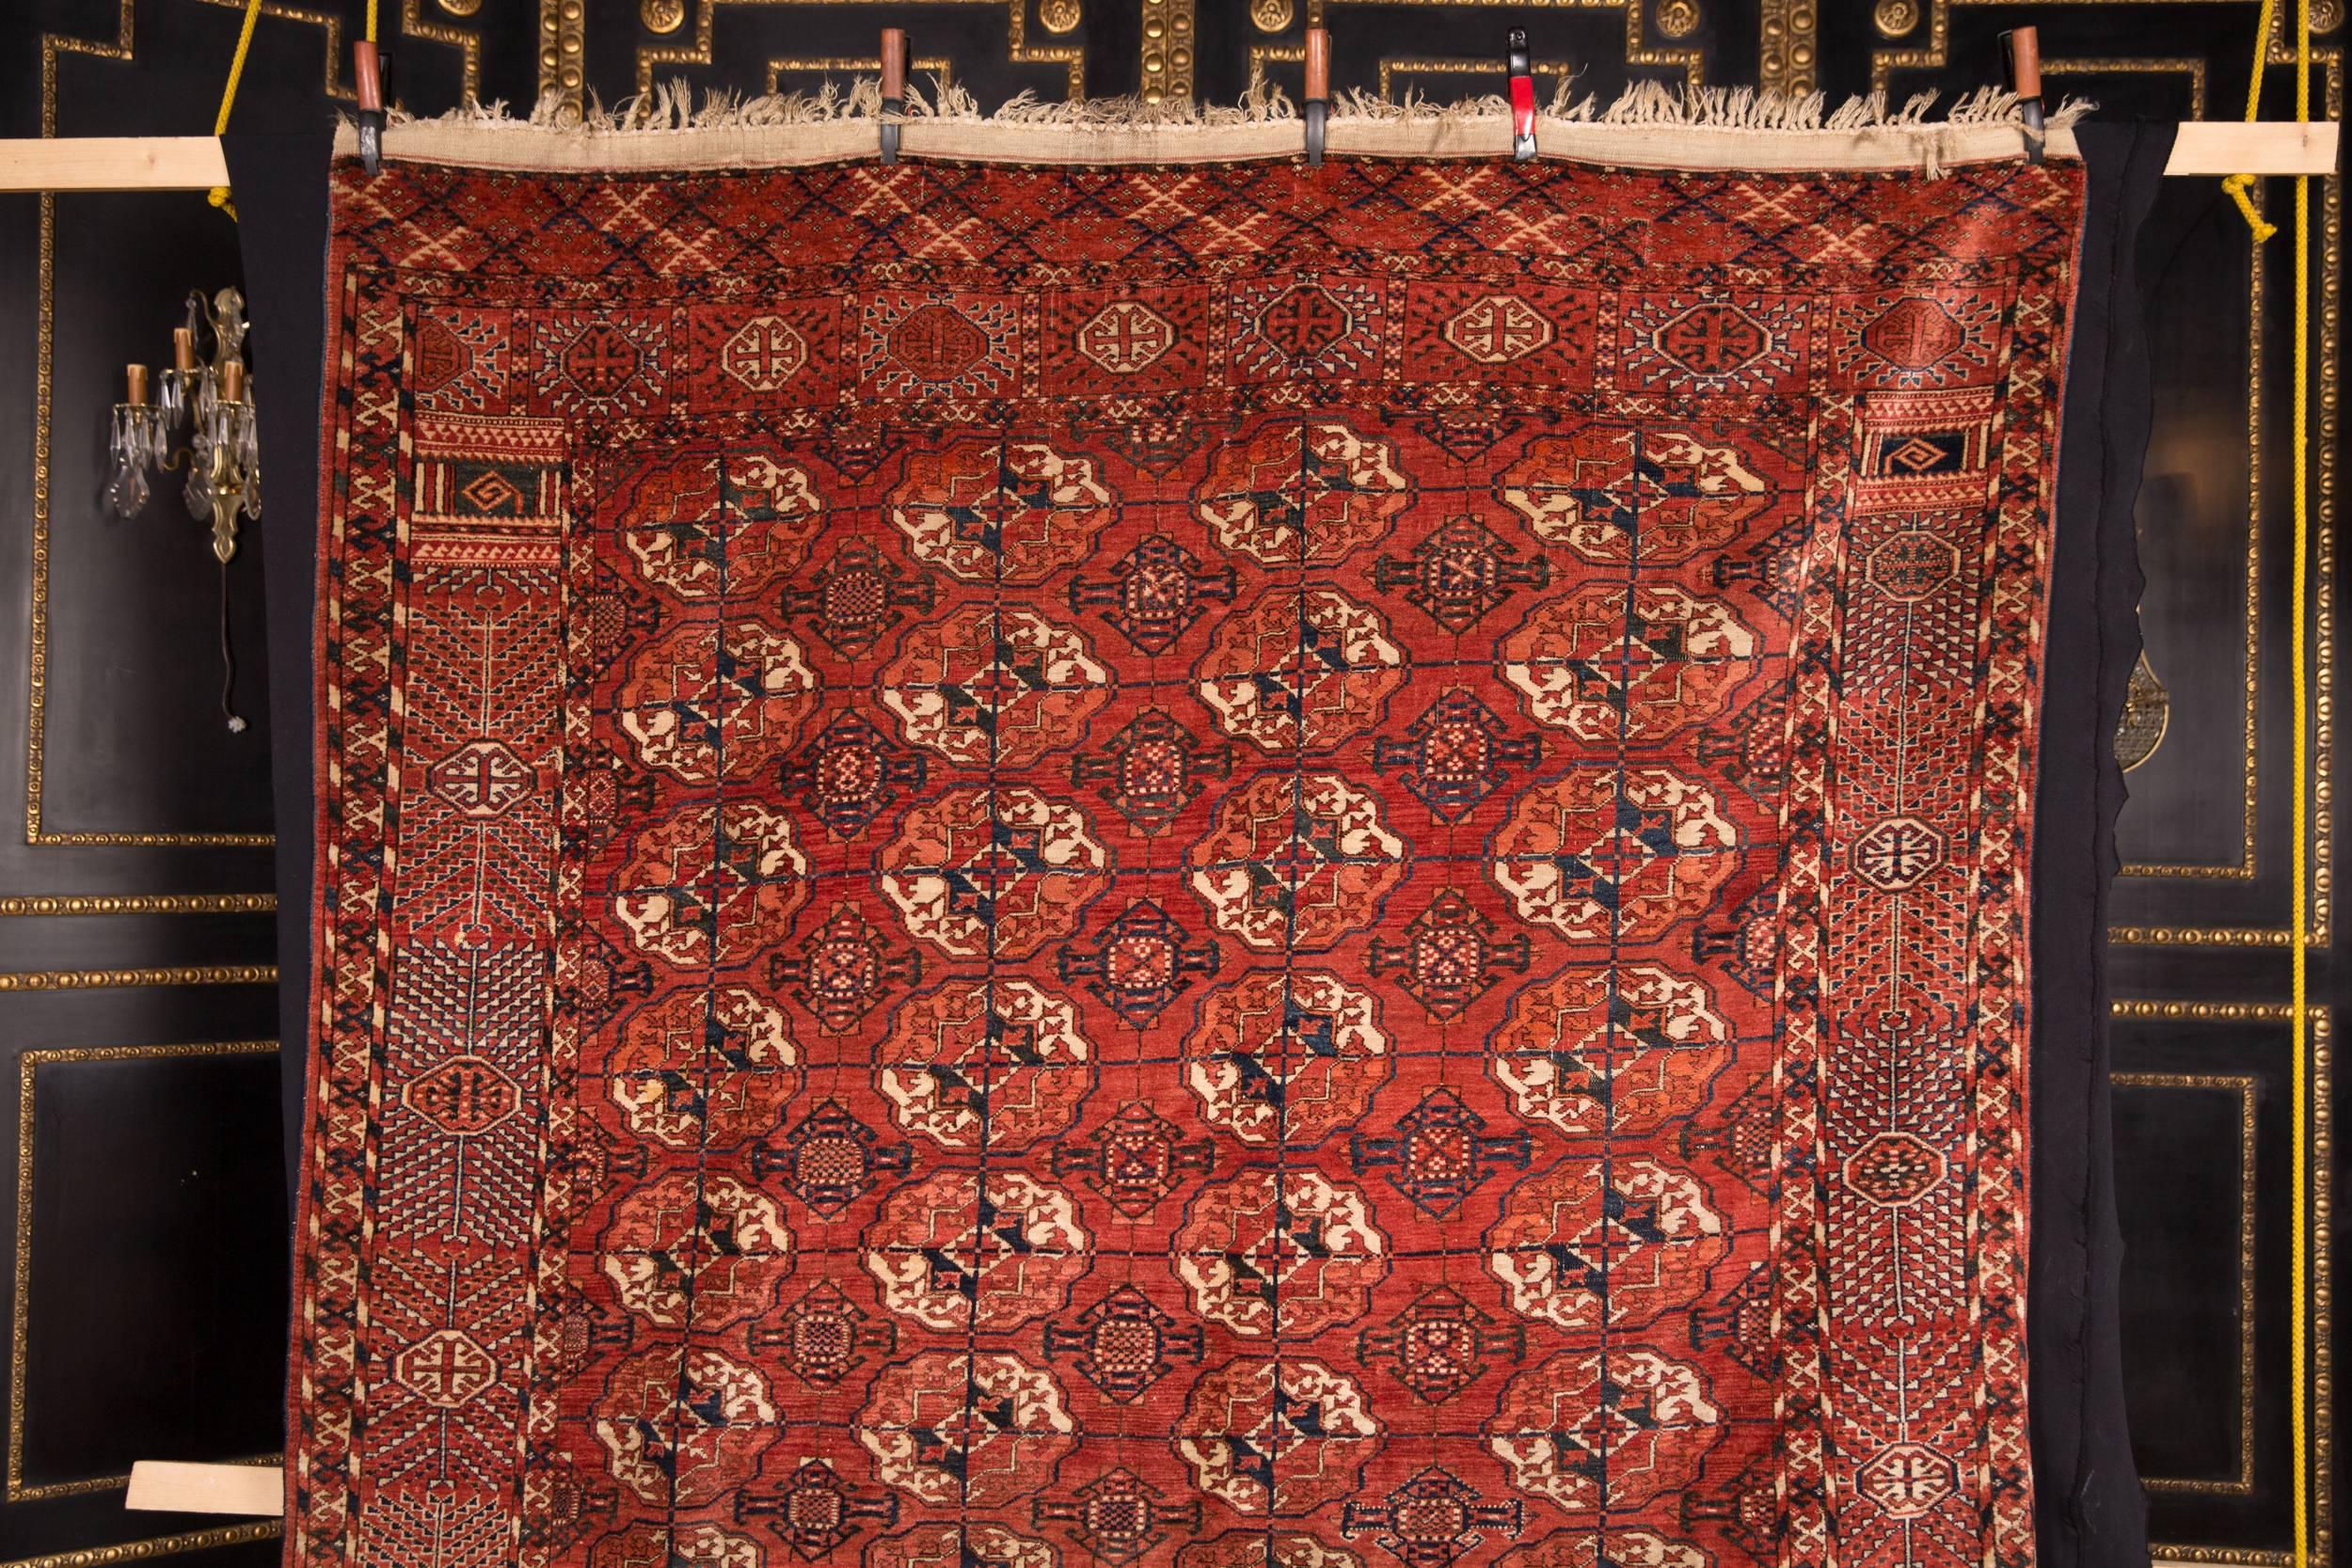 Wonderful antique rare Buchara carpet.
